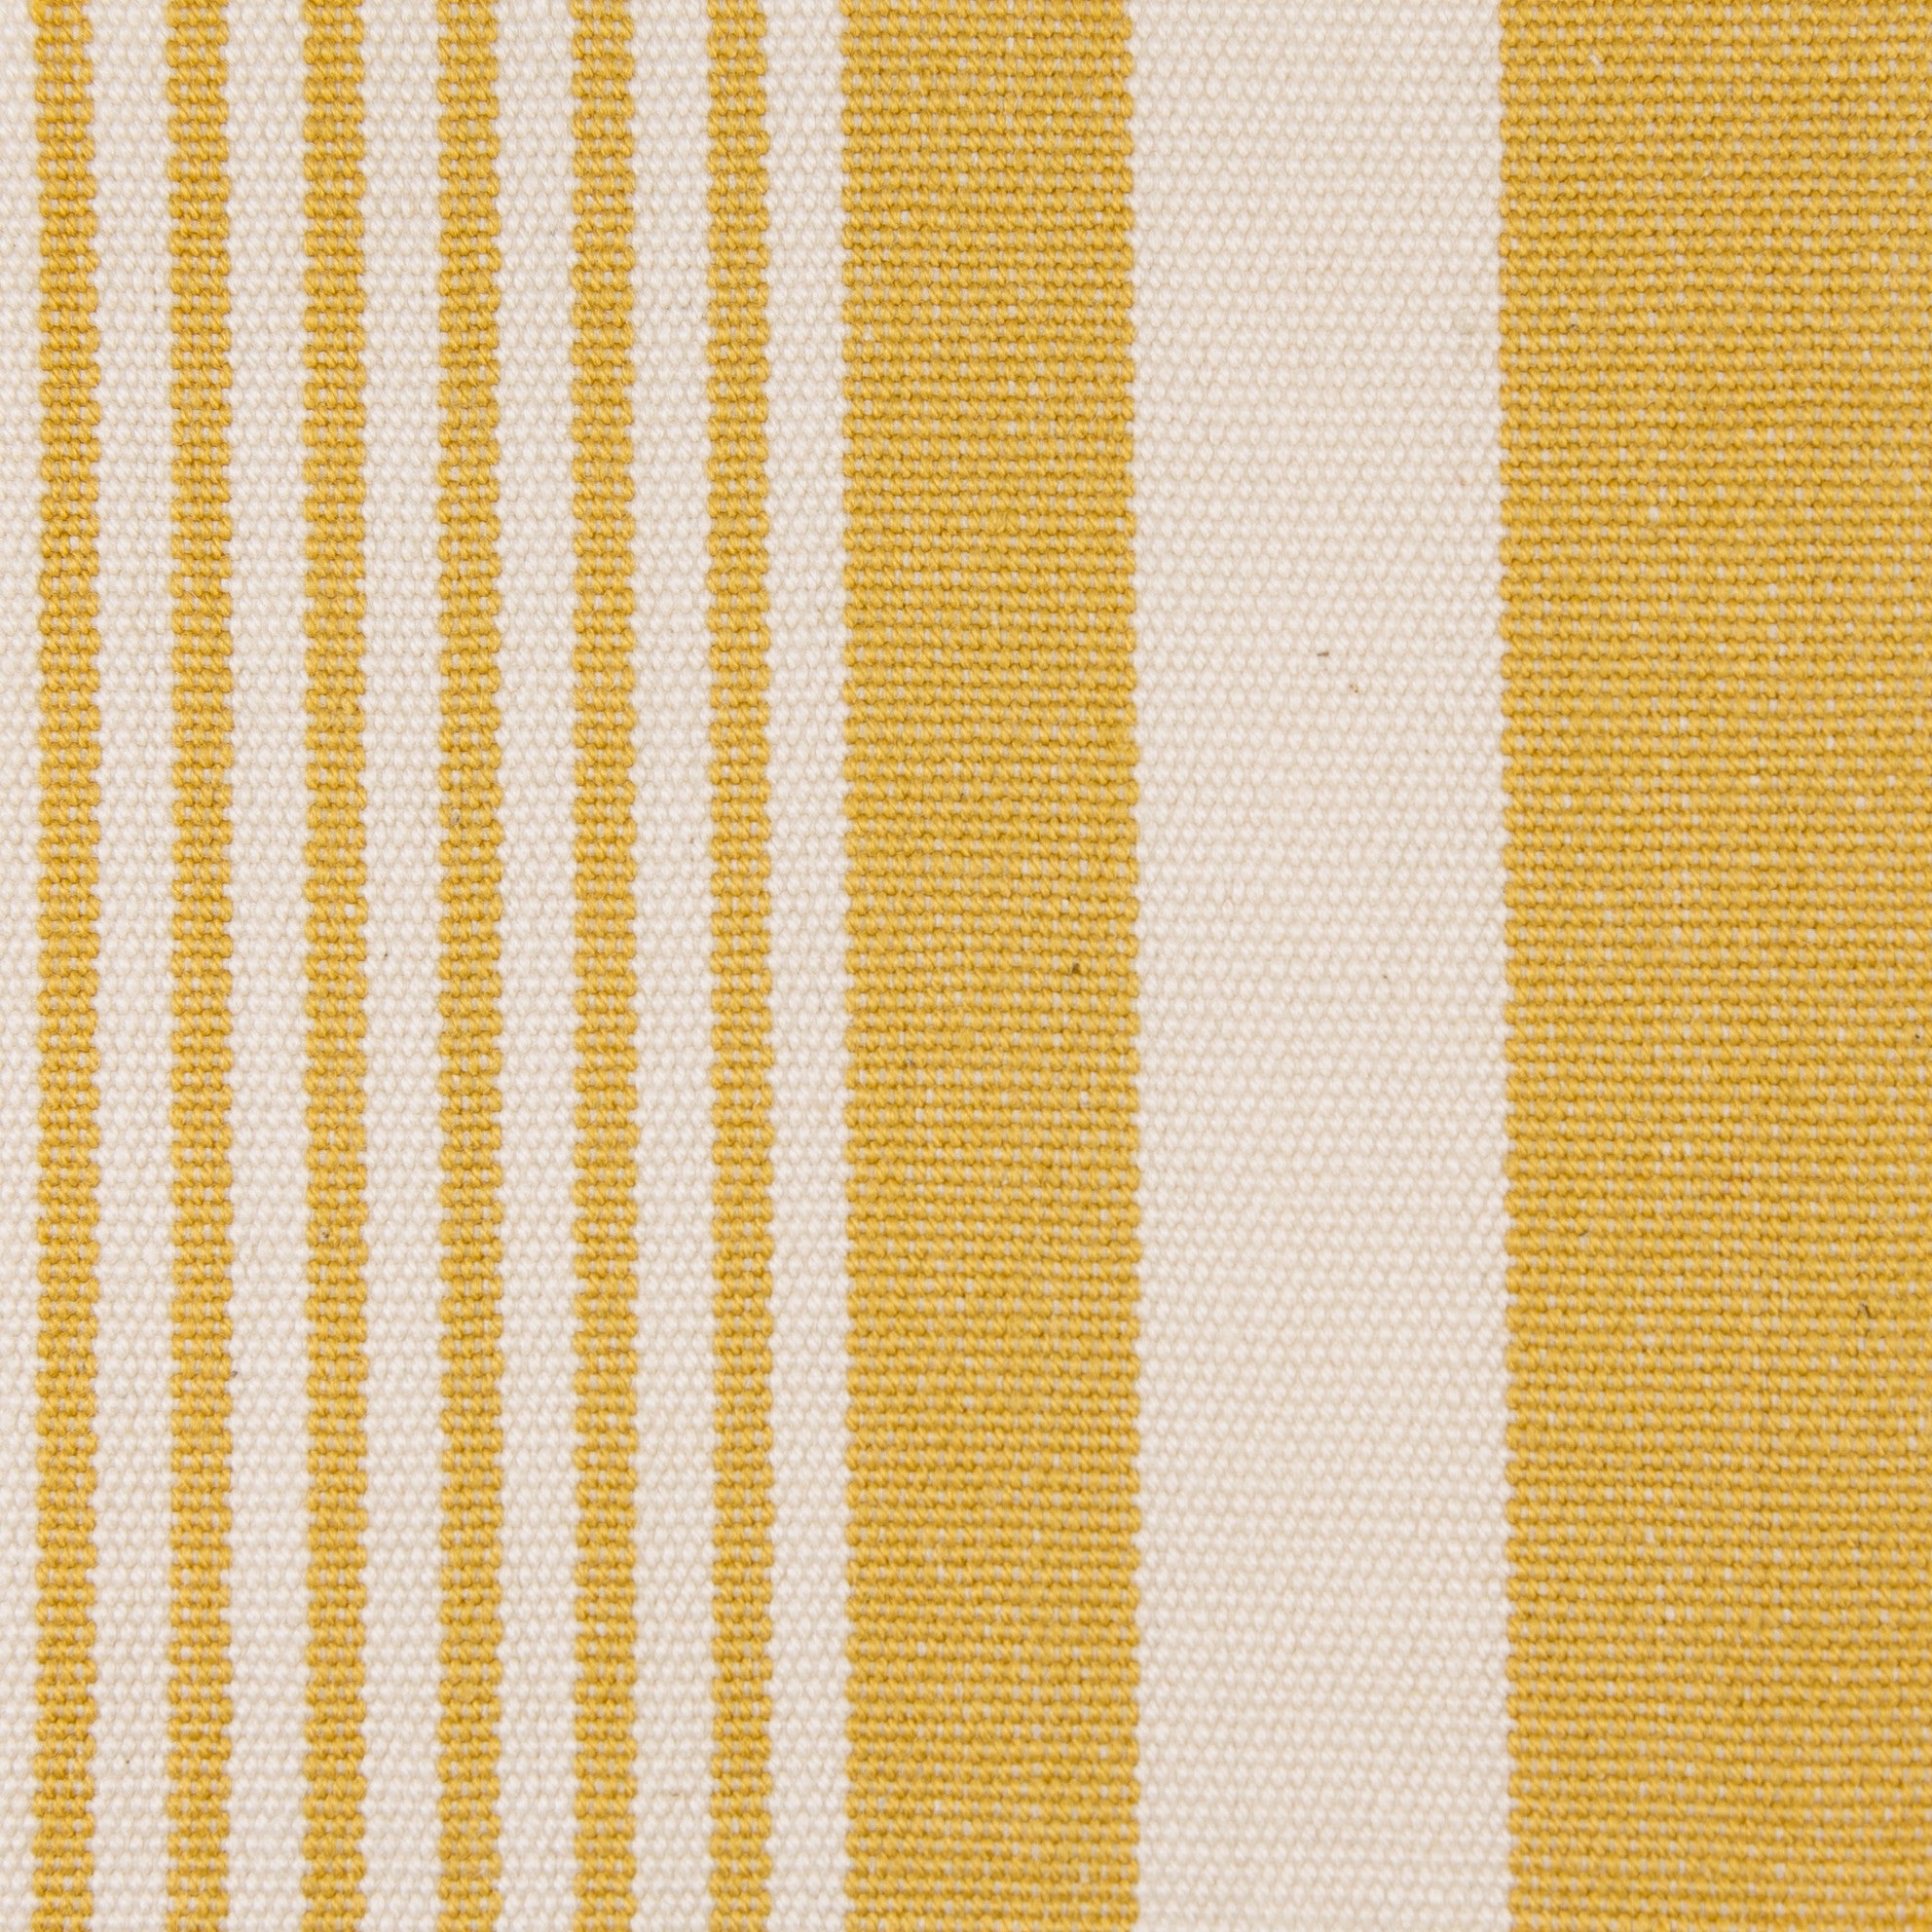 Woven Striped Fabric - Crantock 05/090 Honeysuckle Yellow | Nicholas Engert Interiors